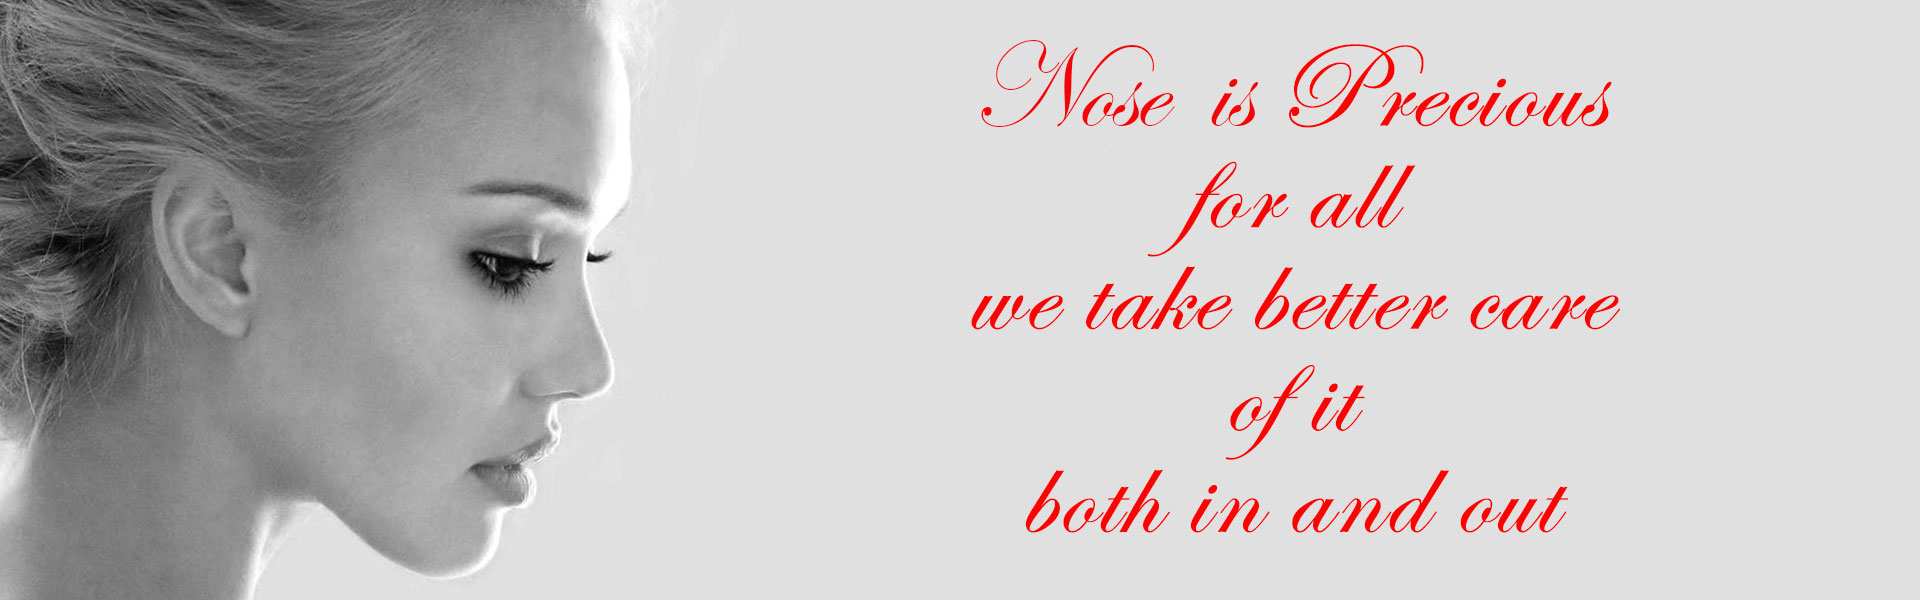 nose_care